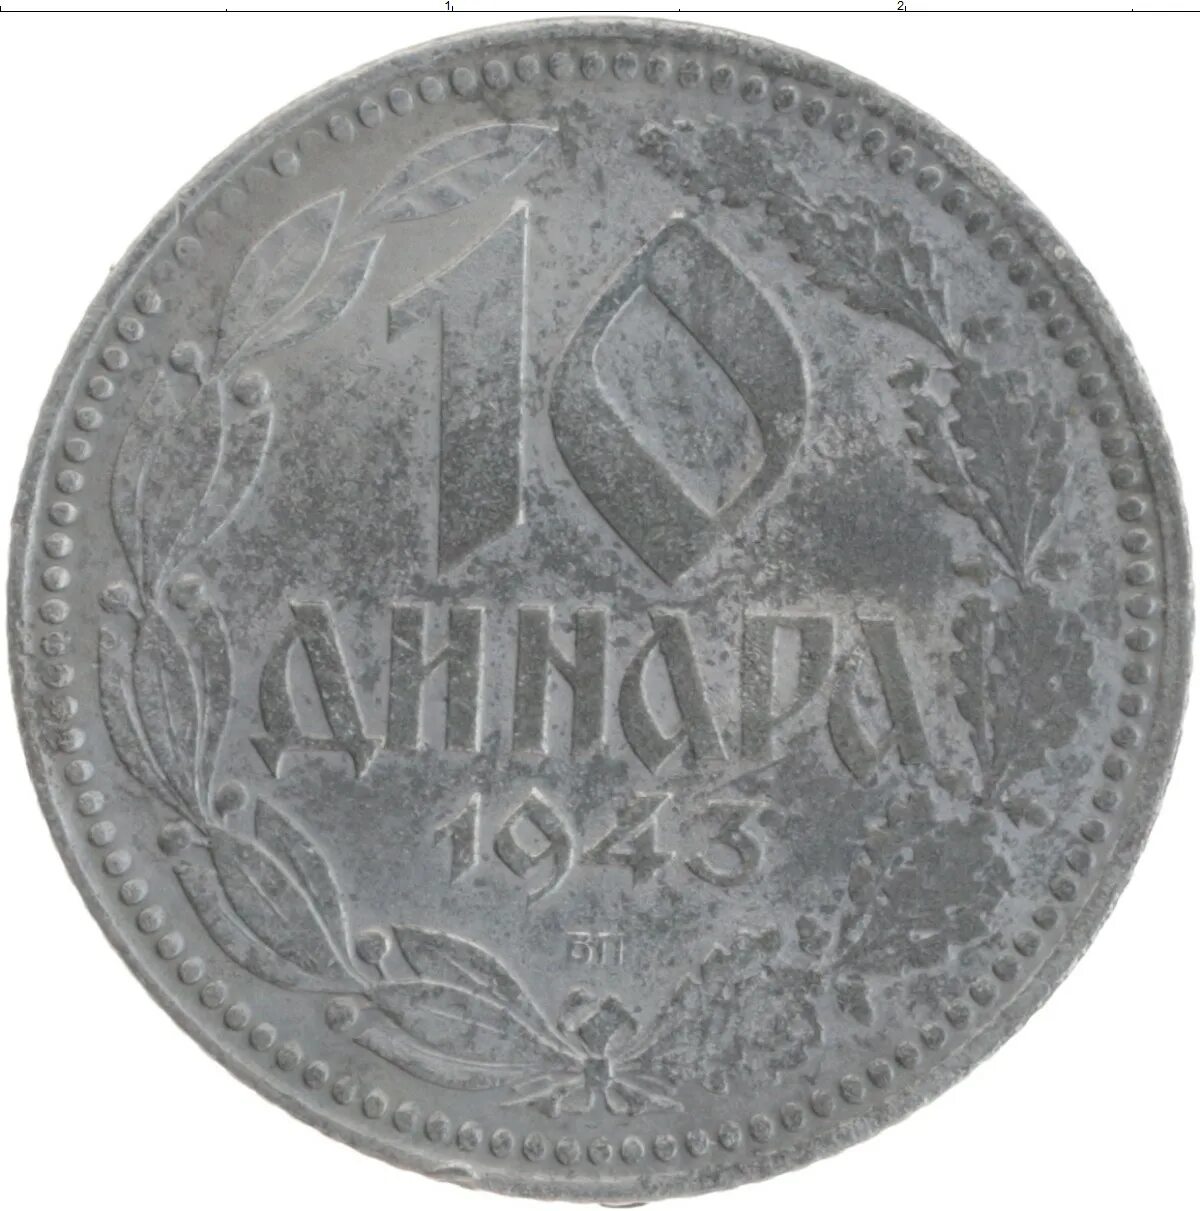 2 zinc. Монеты Сербии. Серебряные монеты Сербии. Монета Сербии 10 пара 1912.